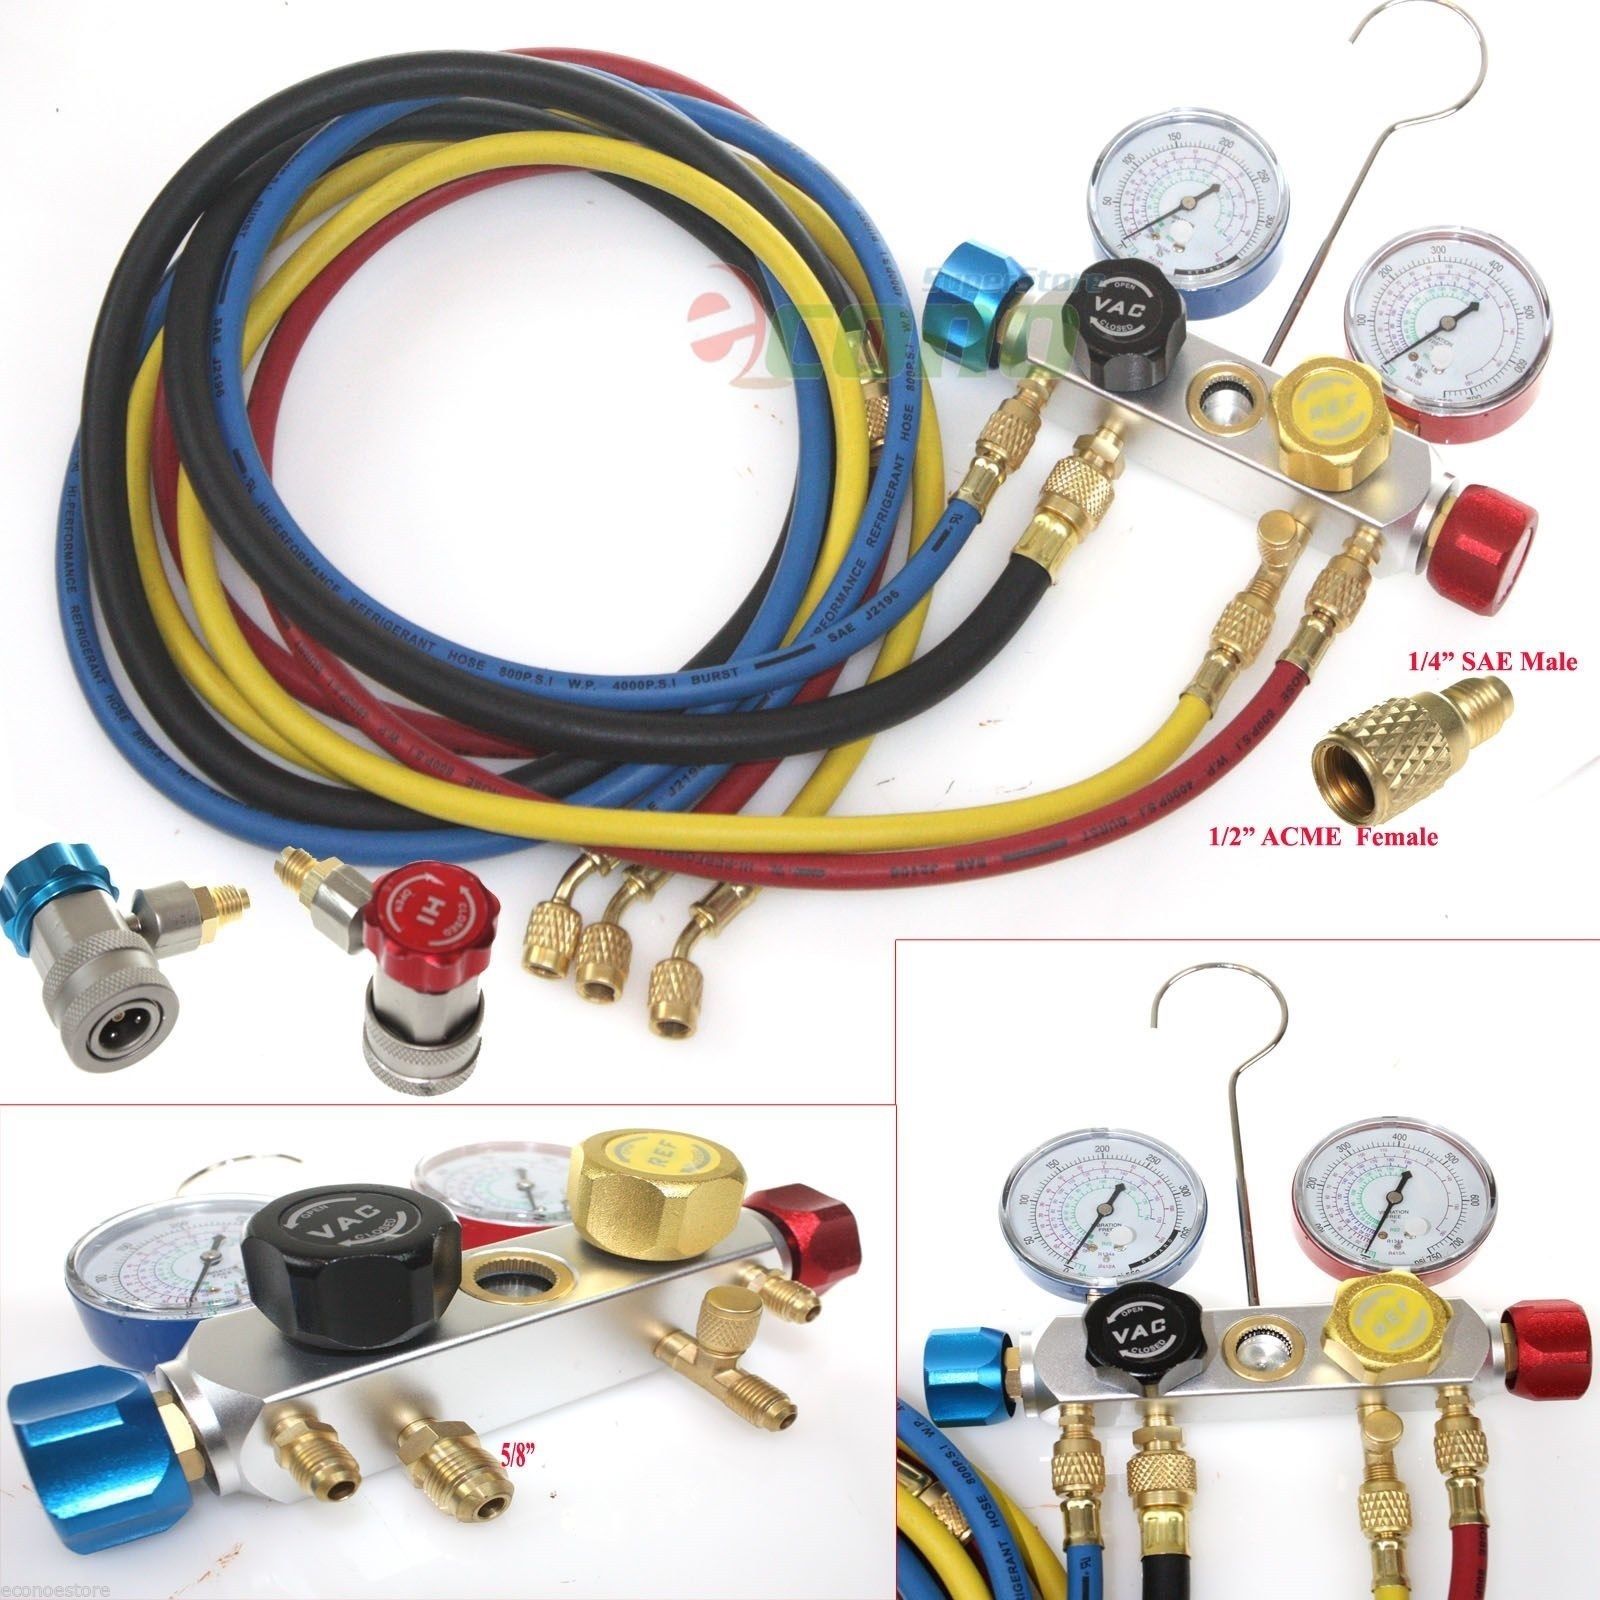 4 Way AC Manifold Gauge Set R410a R22 R134a w/Hoses Coupler Adapters 1/2" ACME 